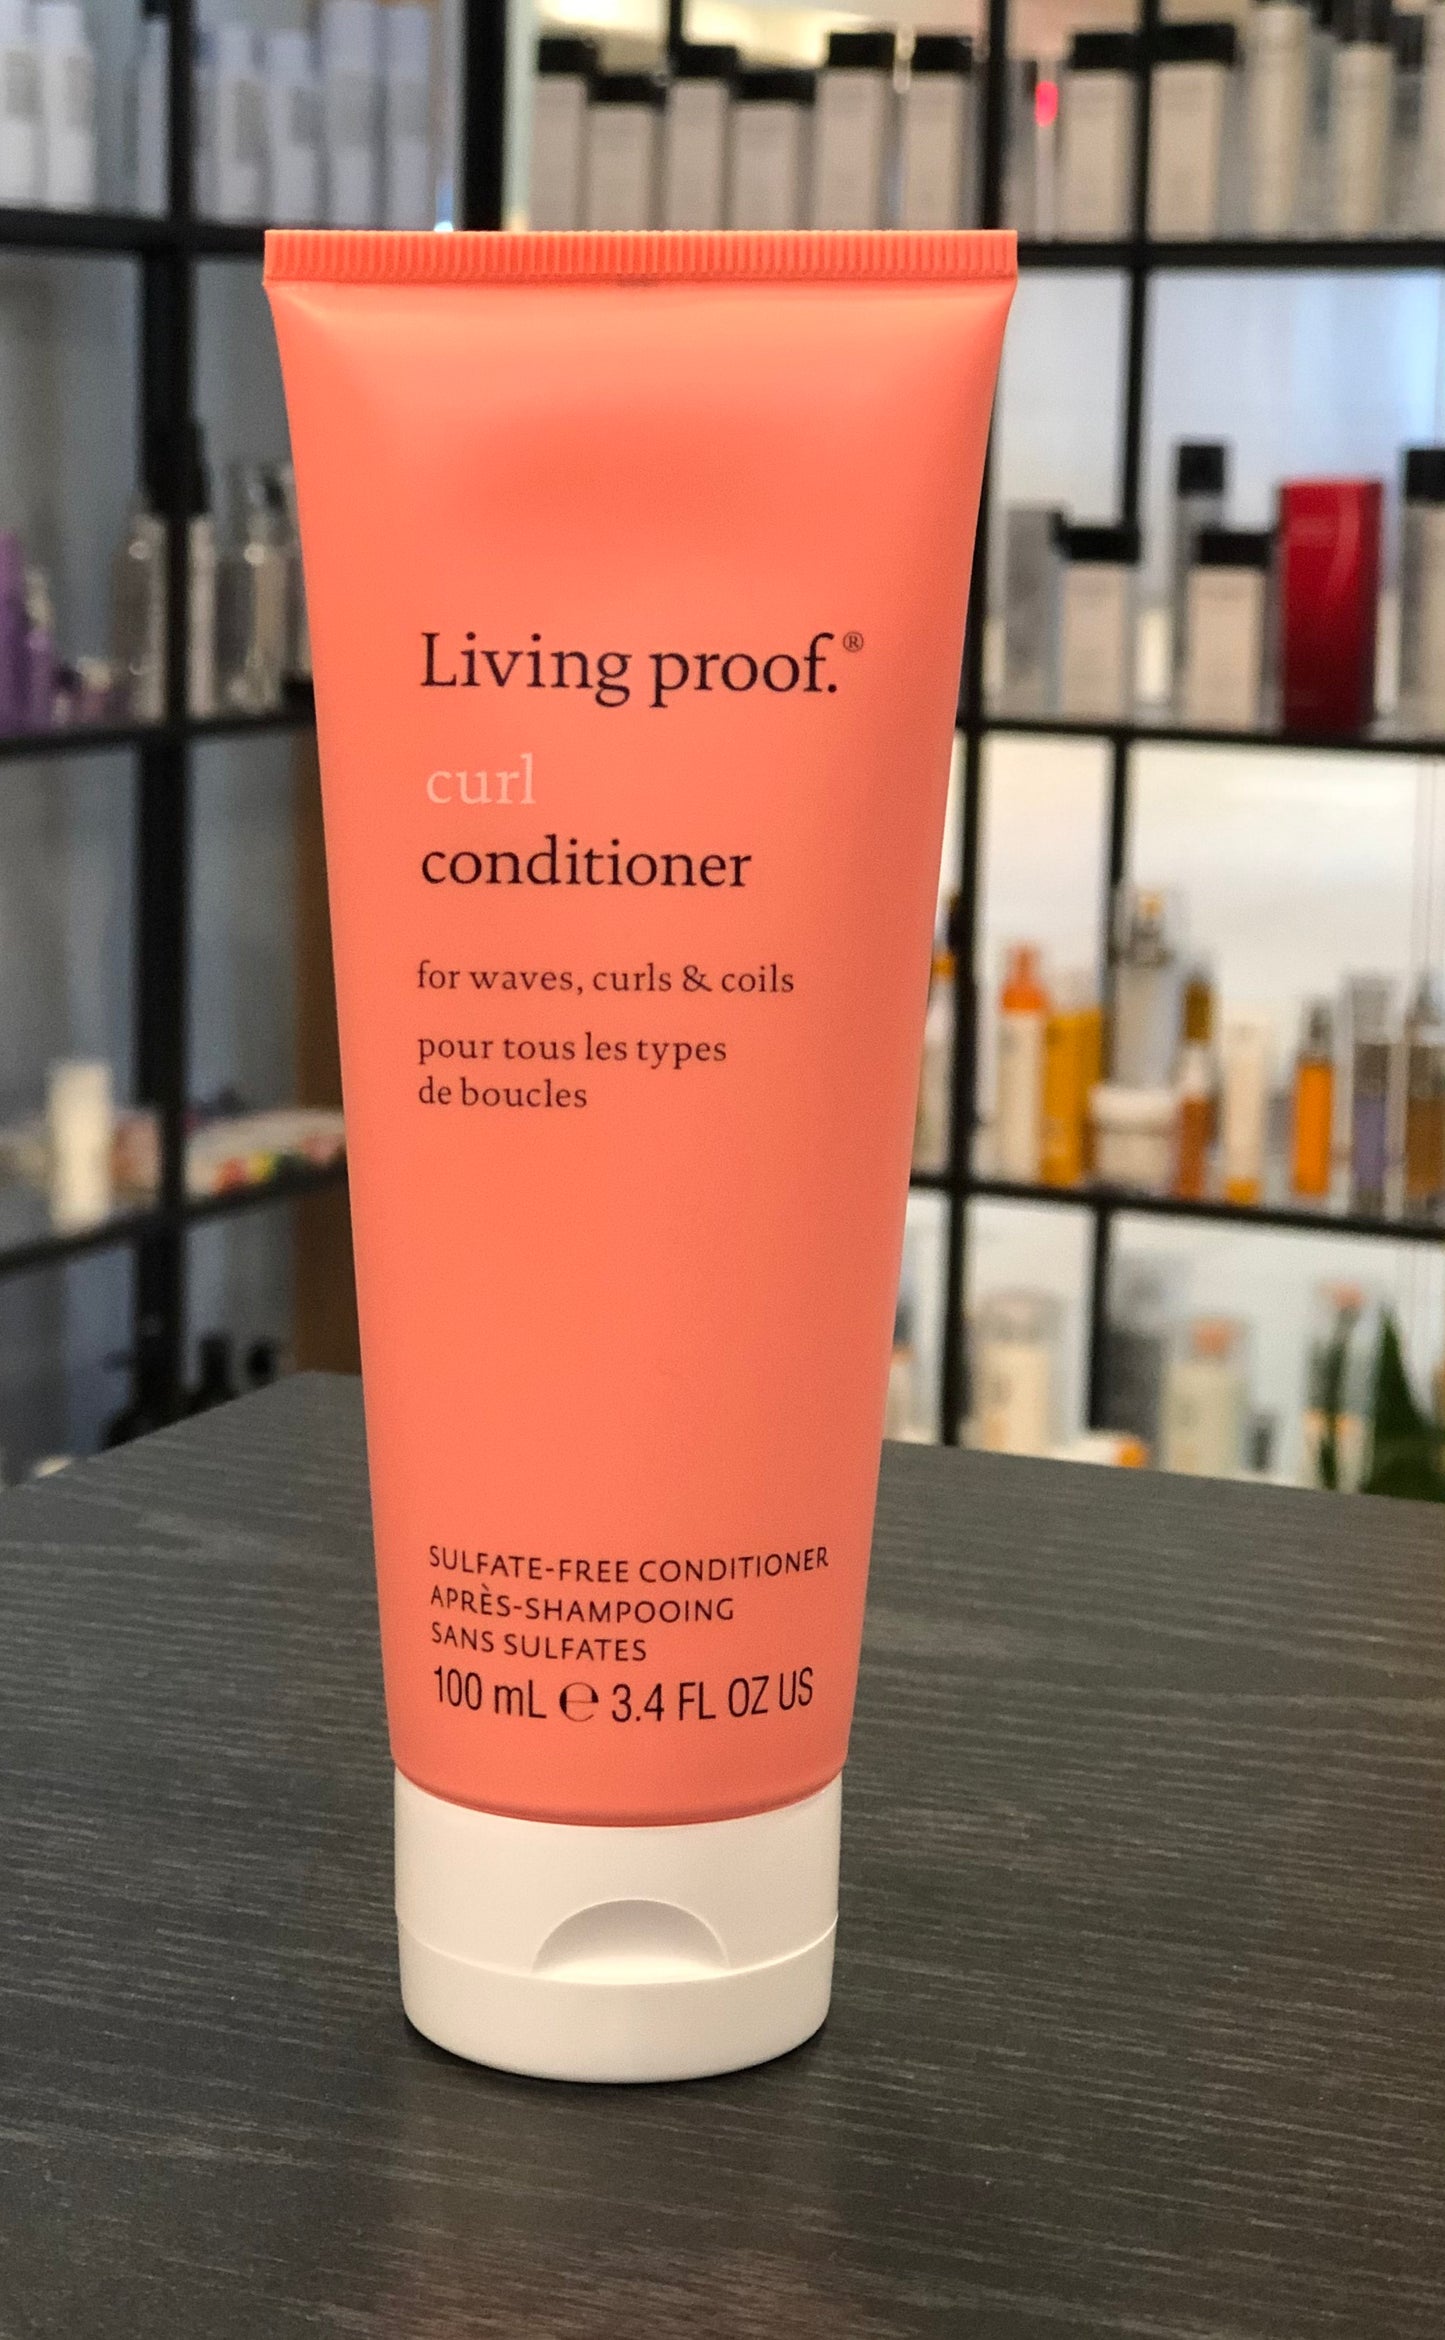 Living proof - Curl conditioner 3.4 fl. oz./ 100 ml